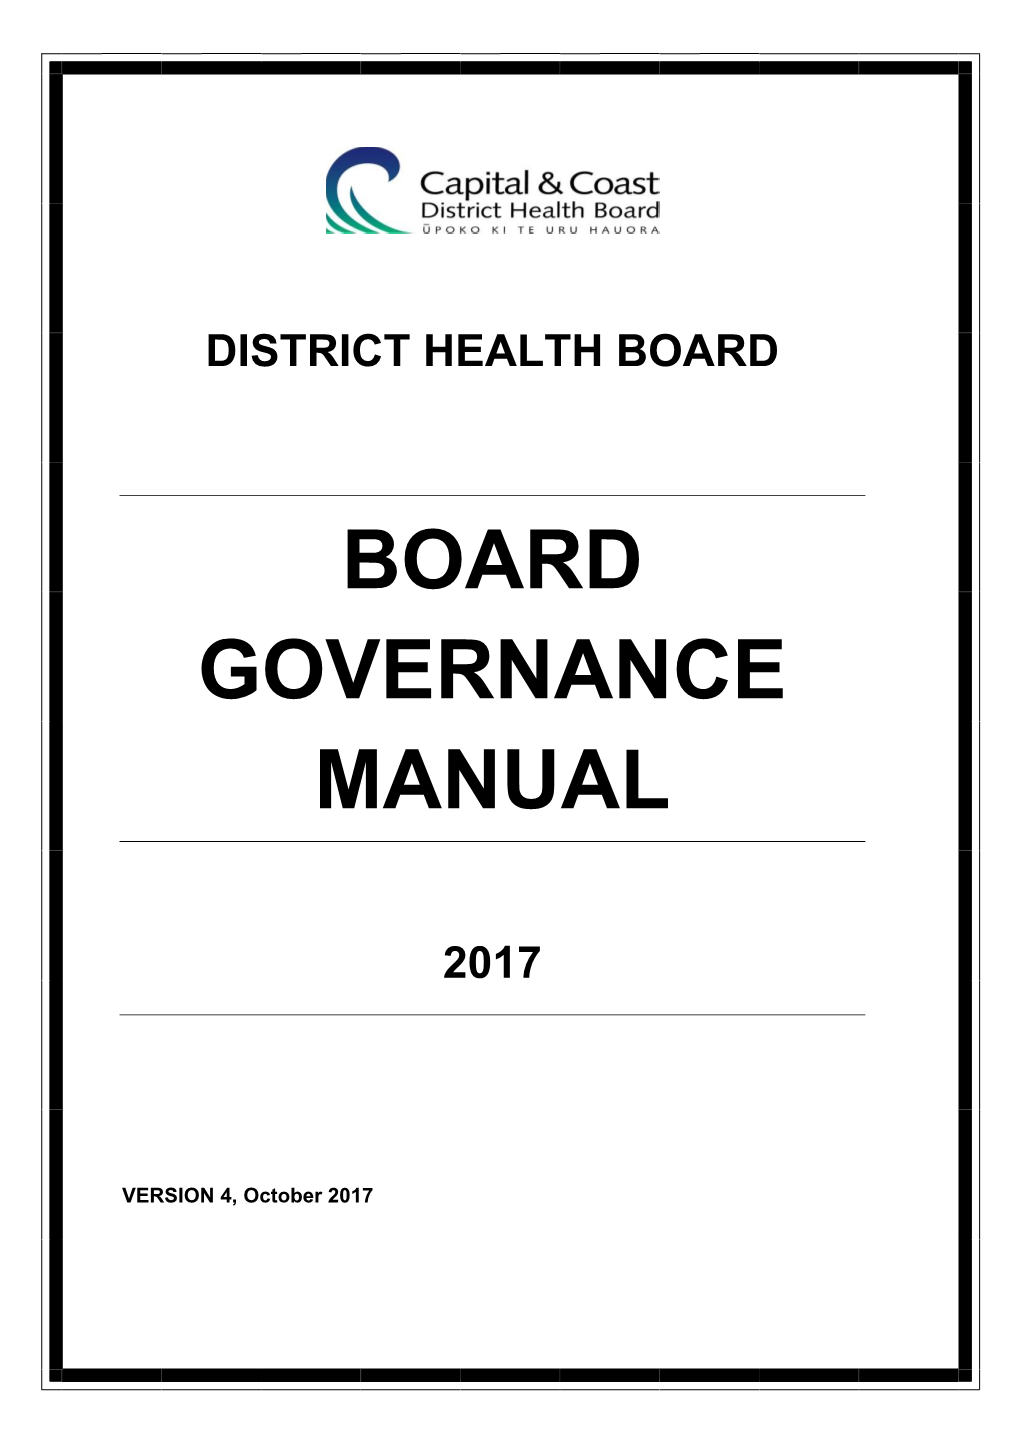 Governance Manual 2004